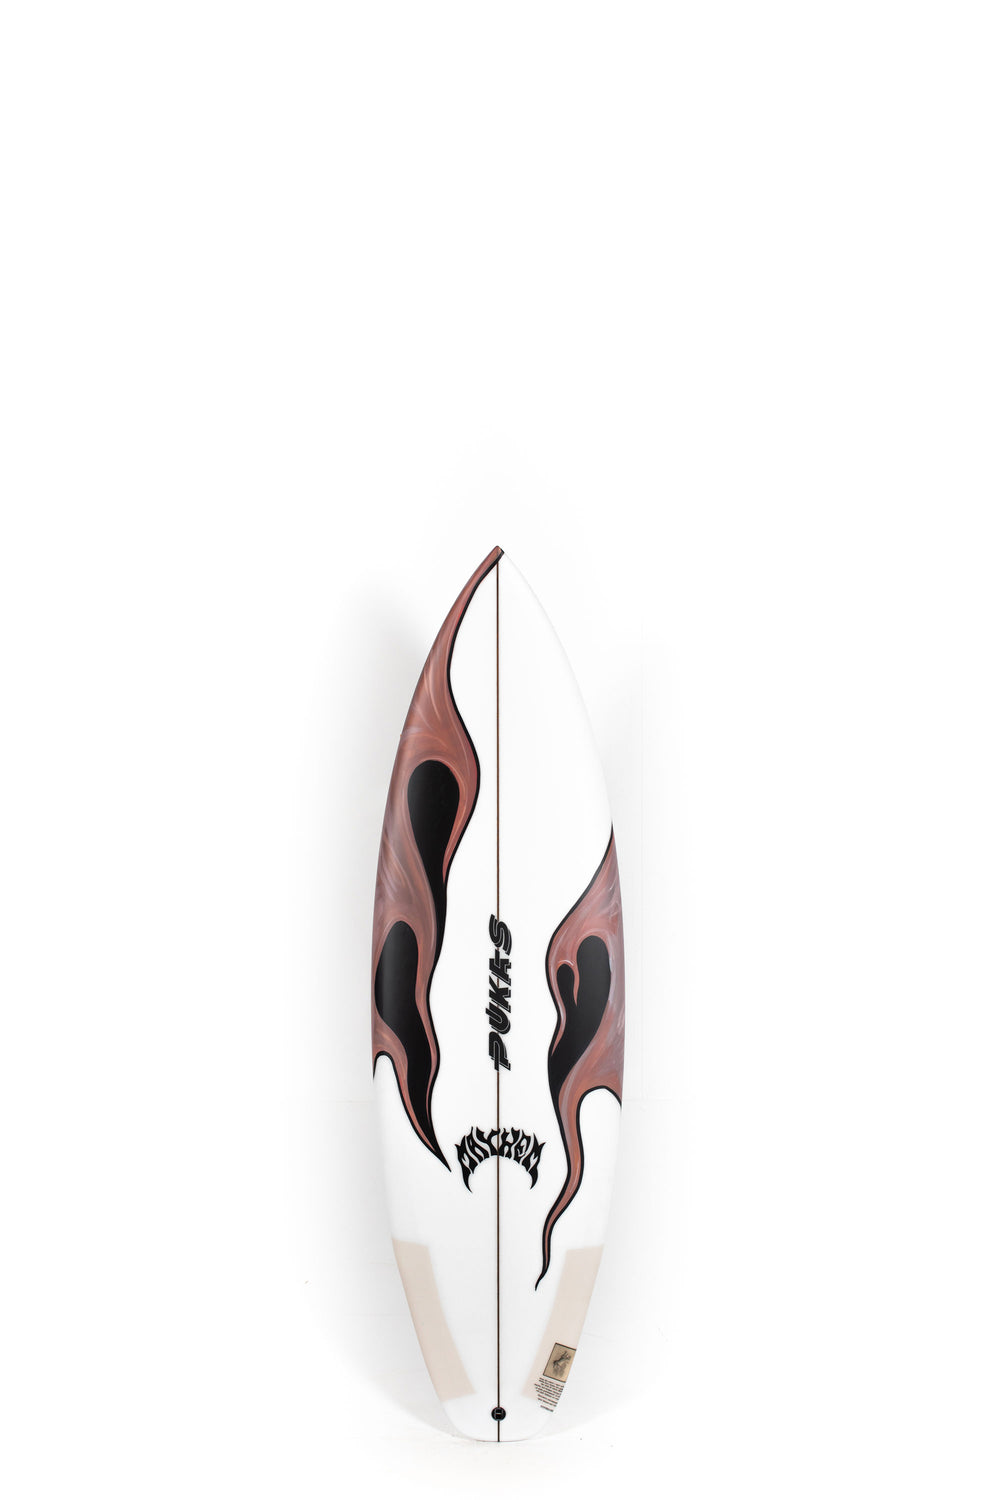 Pukas Surf Shop - Pukas Surfboard - HYPERLINK by Matt Biolos - 5'7